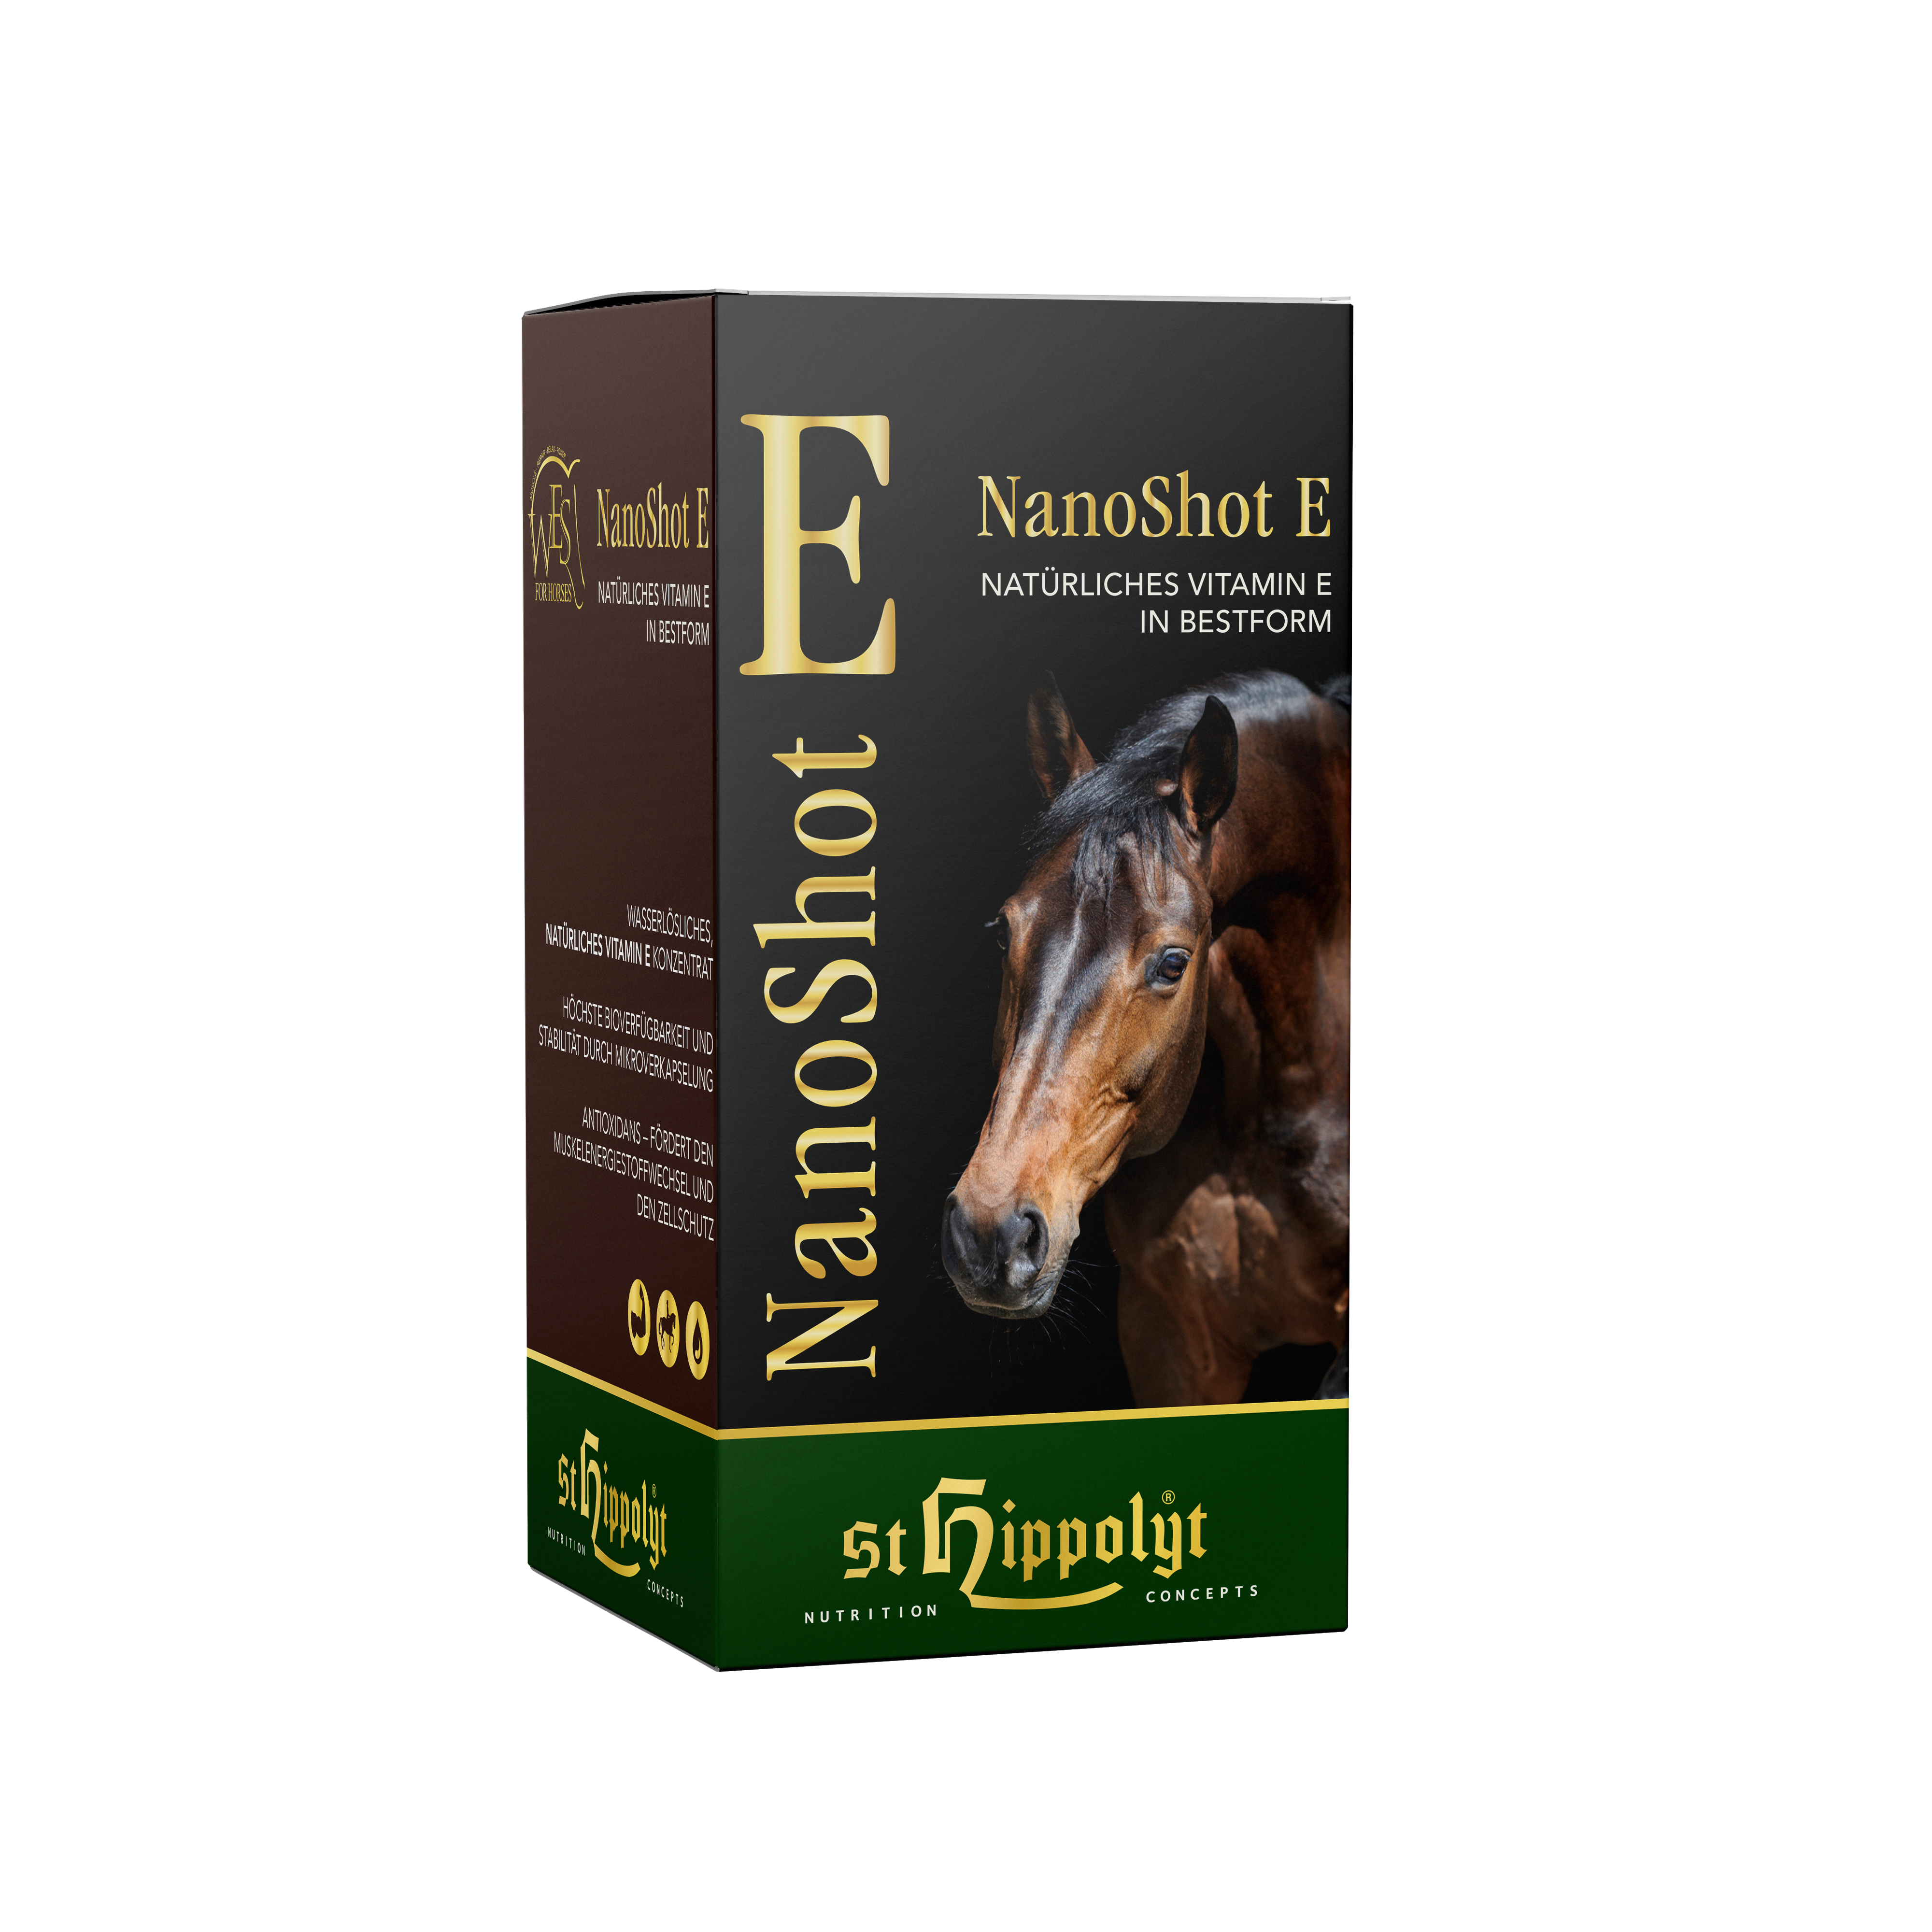 WES FOR HORSES - NanoShot E - wasserlösliches, natürliches Vitamin E Konzentrat für Pferde